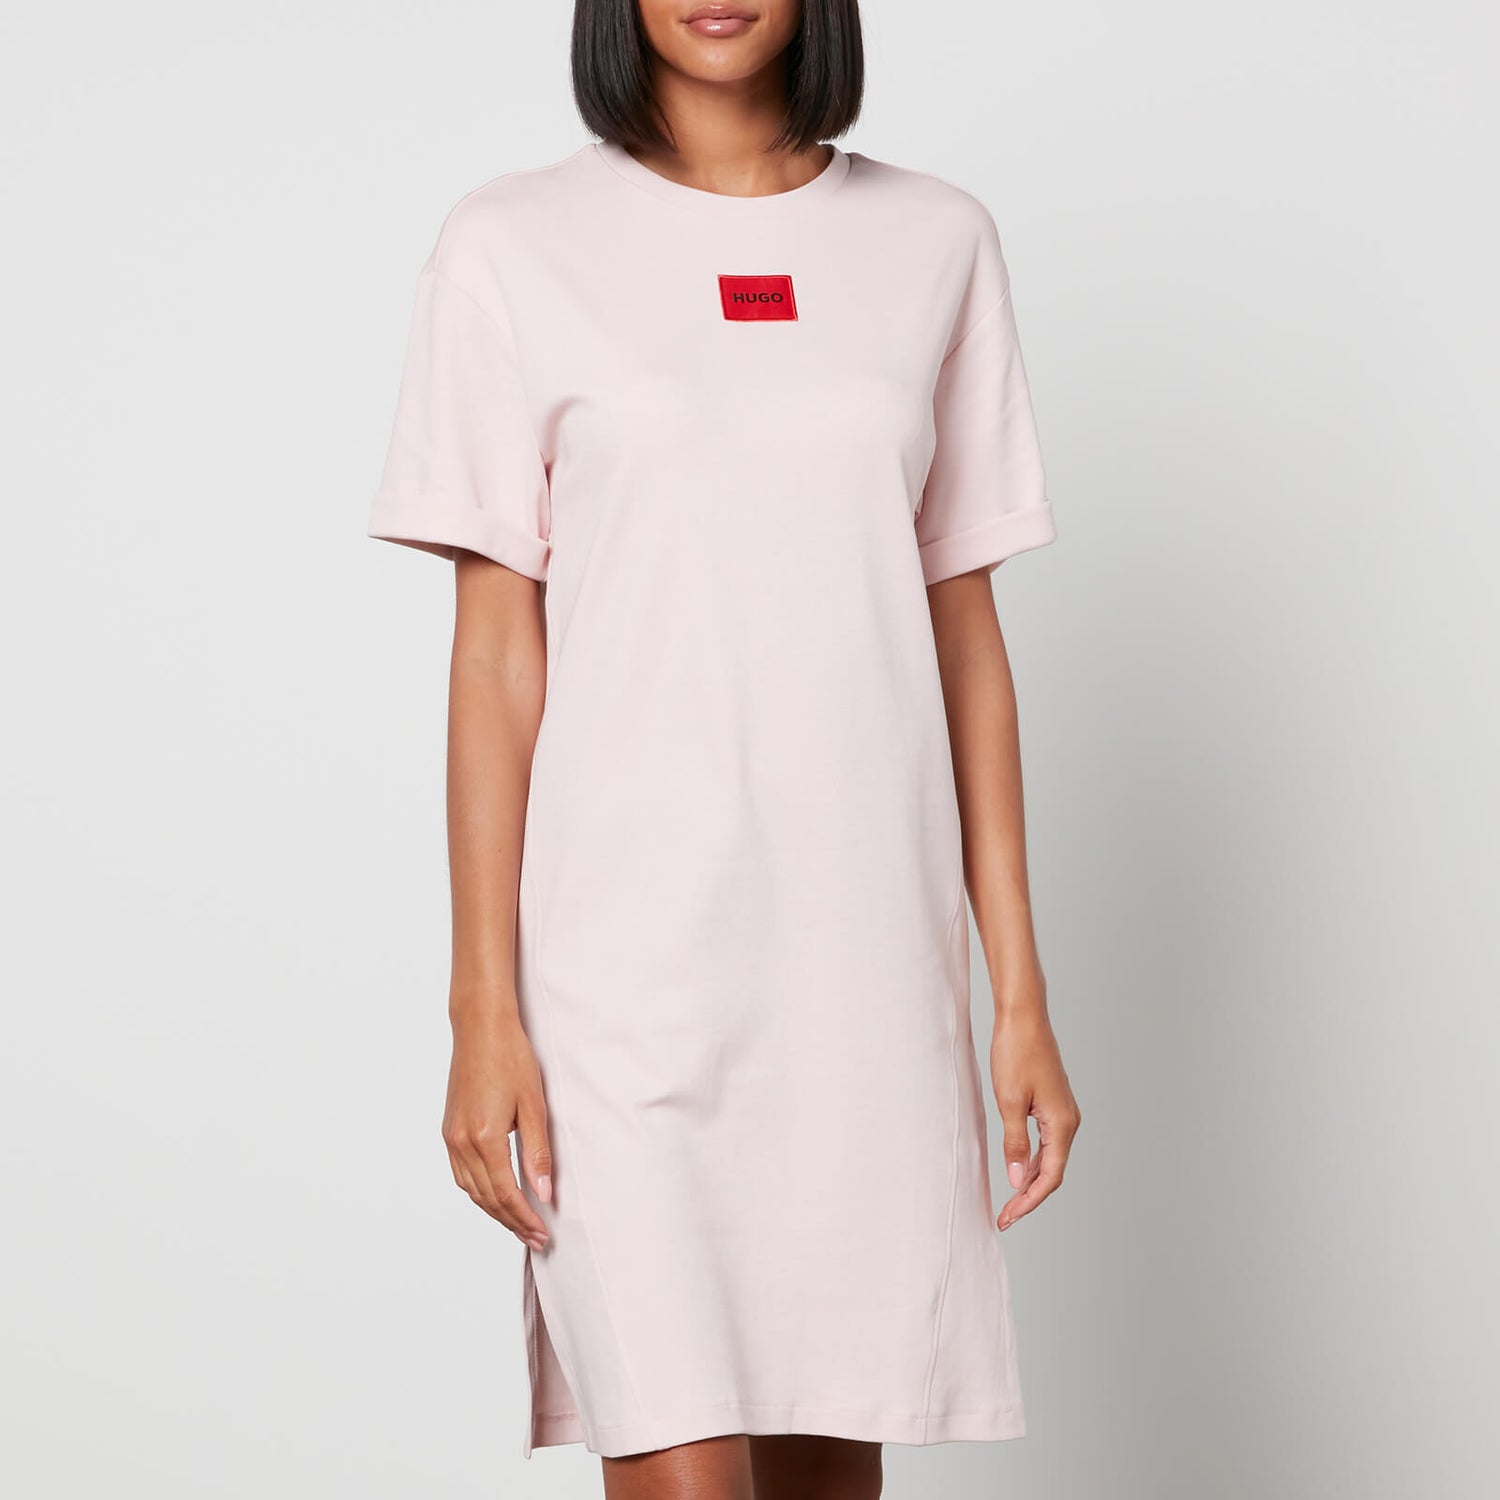 HUGO Women's Neyle Red Label T-Shirt - Light/Pastel Pink - XS